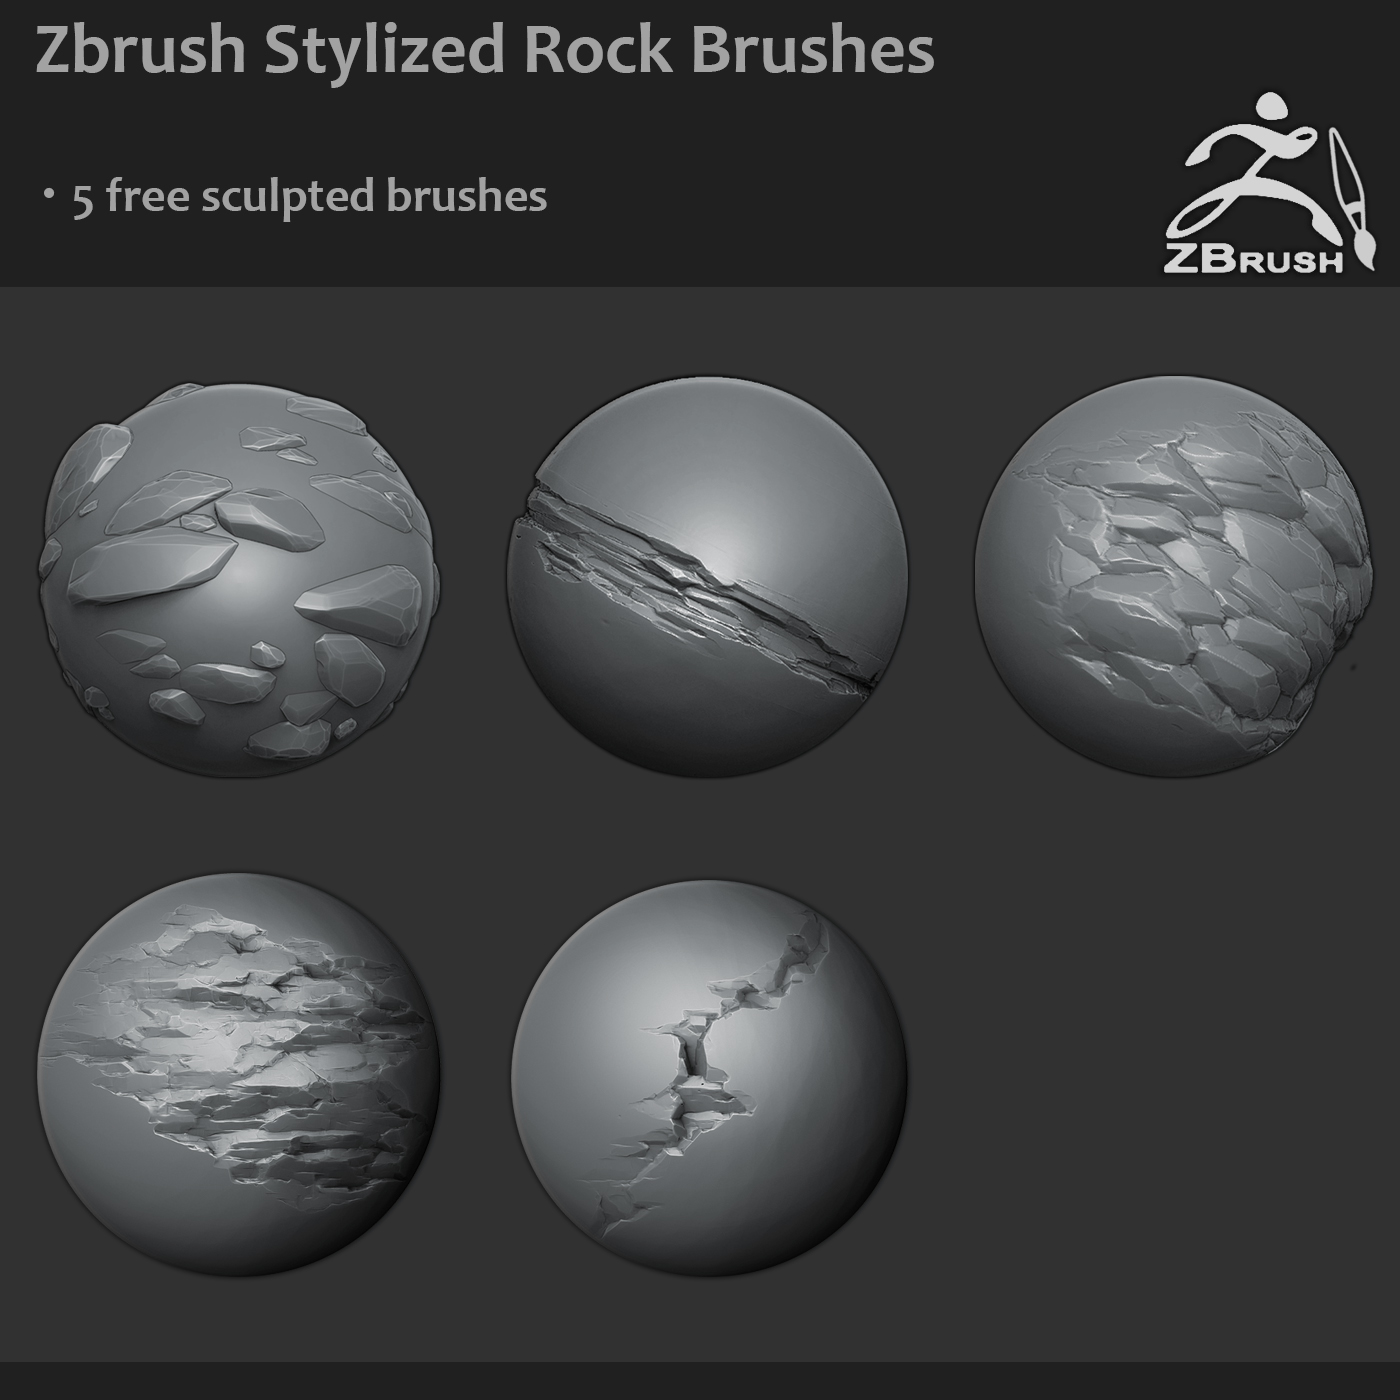 zbrush brushes download free